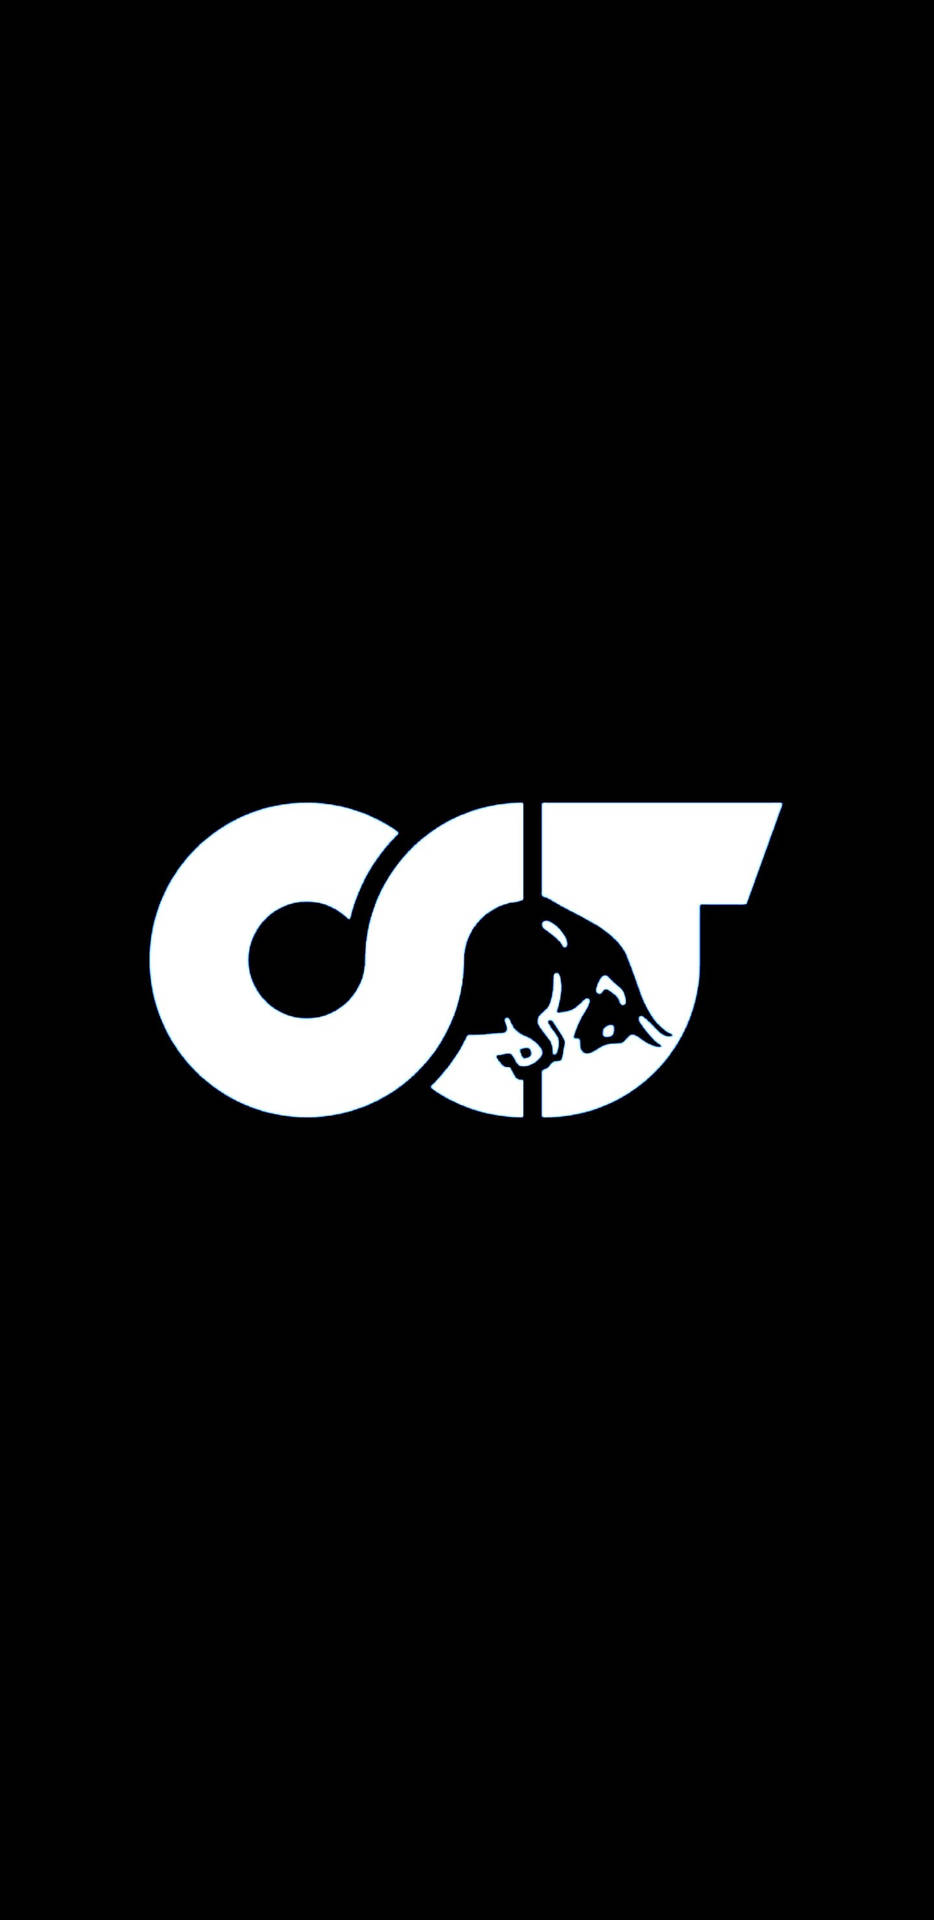 Alphatauri Logo In Black And White Wallpaper